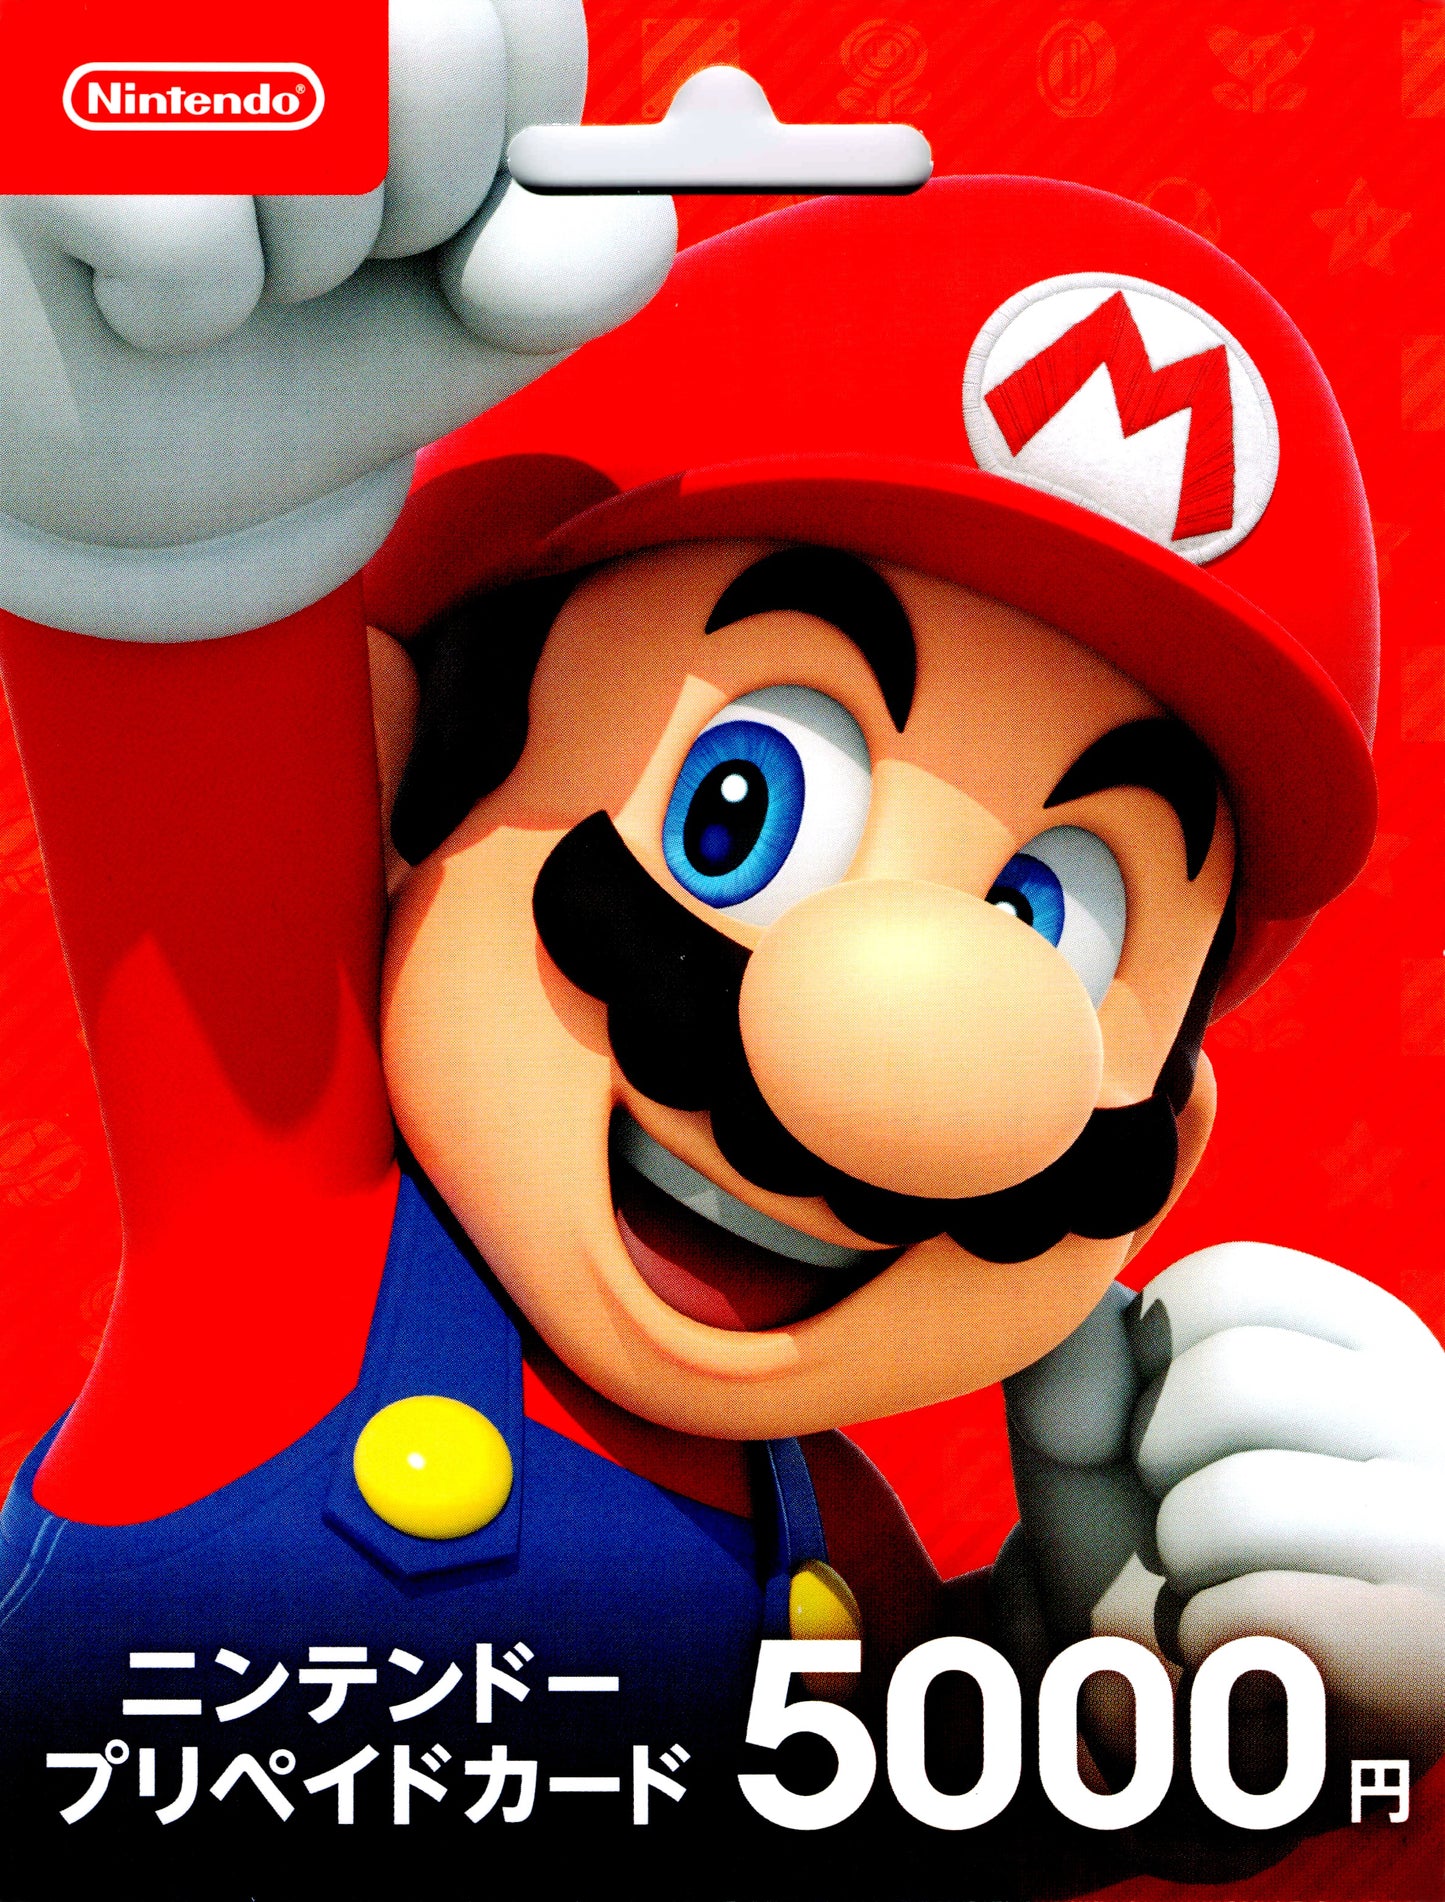 Japan Nintendo eShop Card 9000 Yen: Digital Code